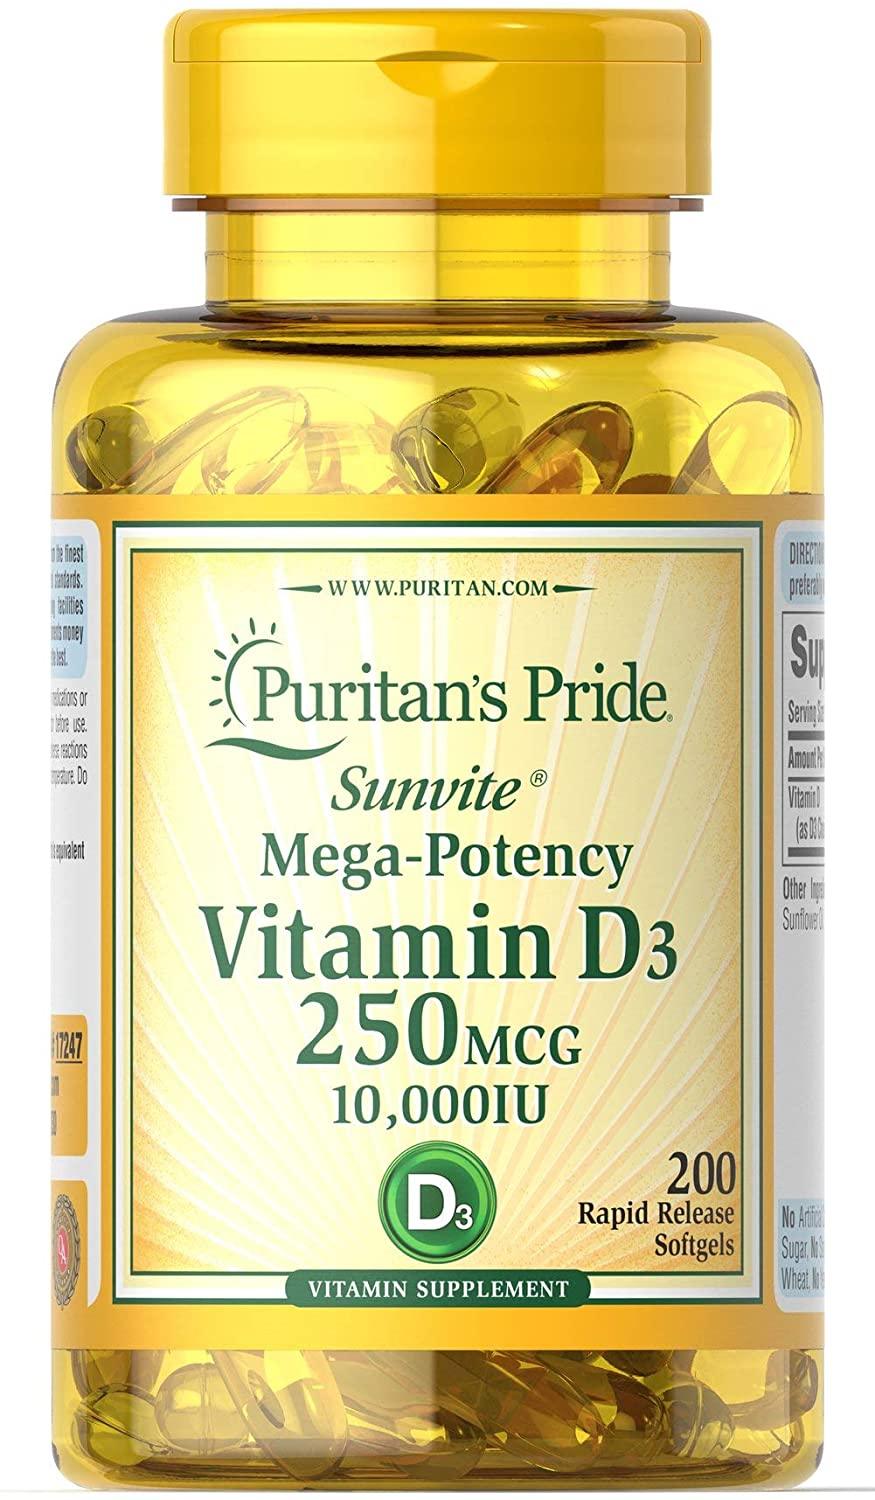 Puritan's Pride Vitamine D3 250mcg (10,000 IU) - mondialpharma.com